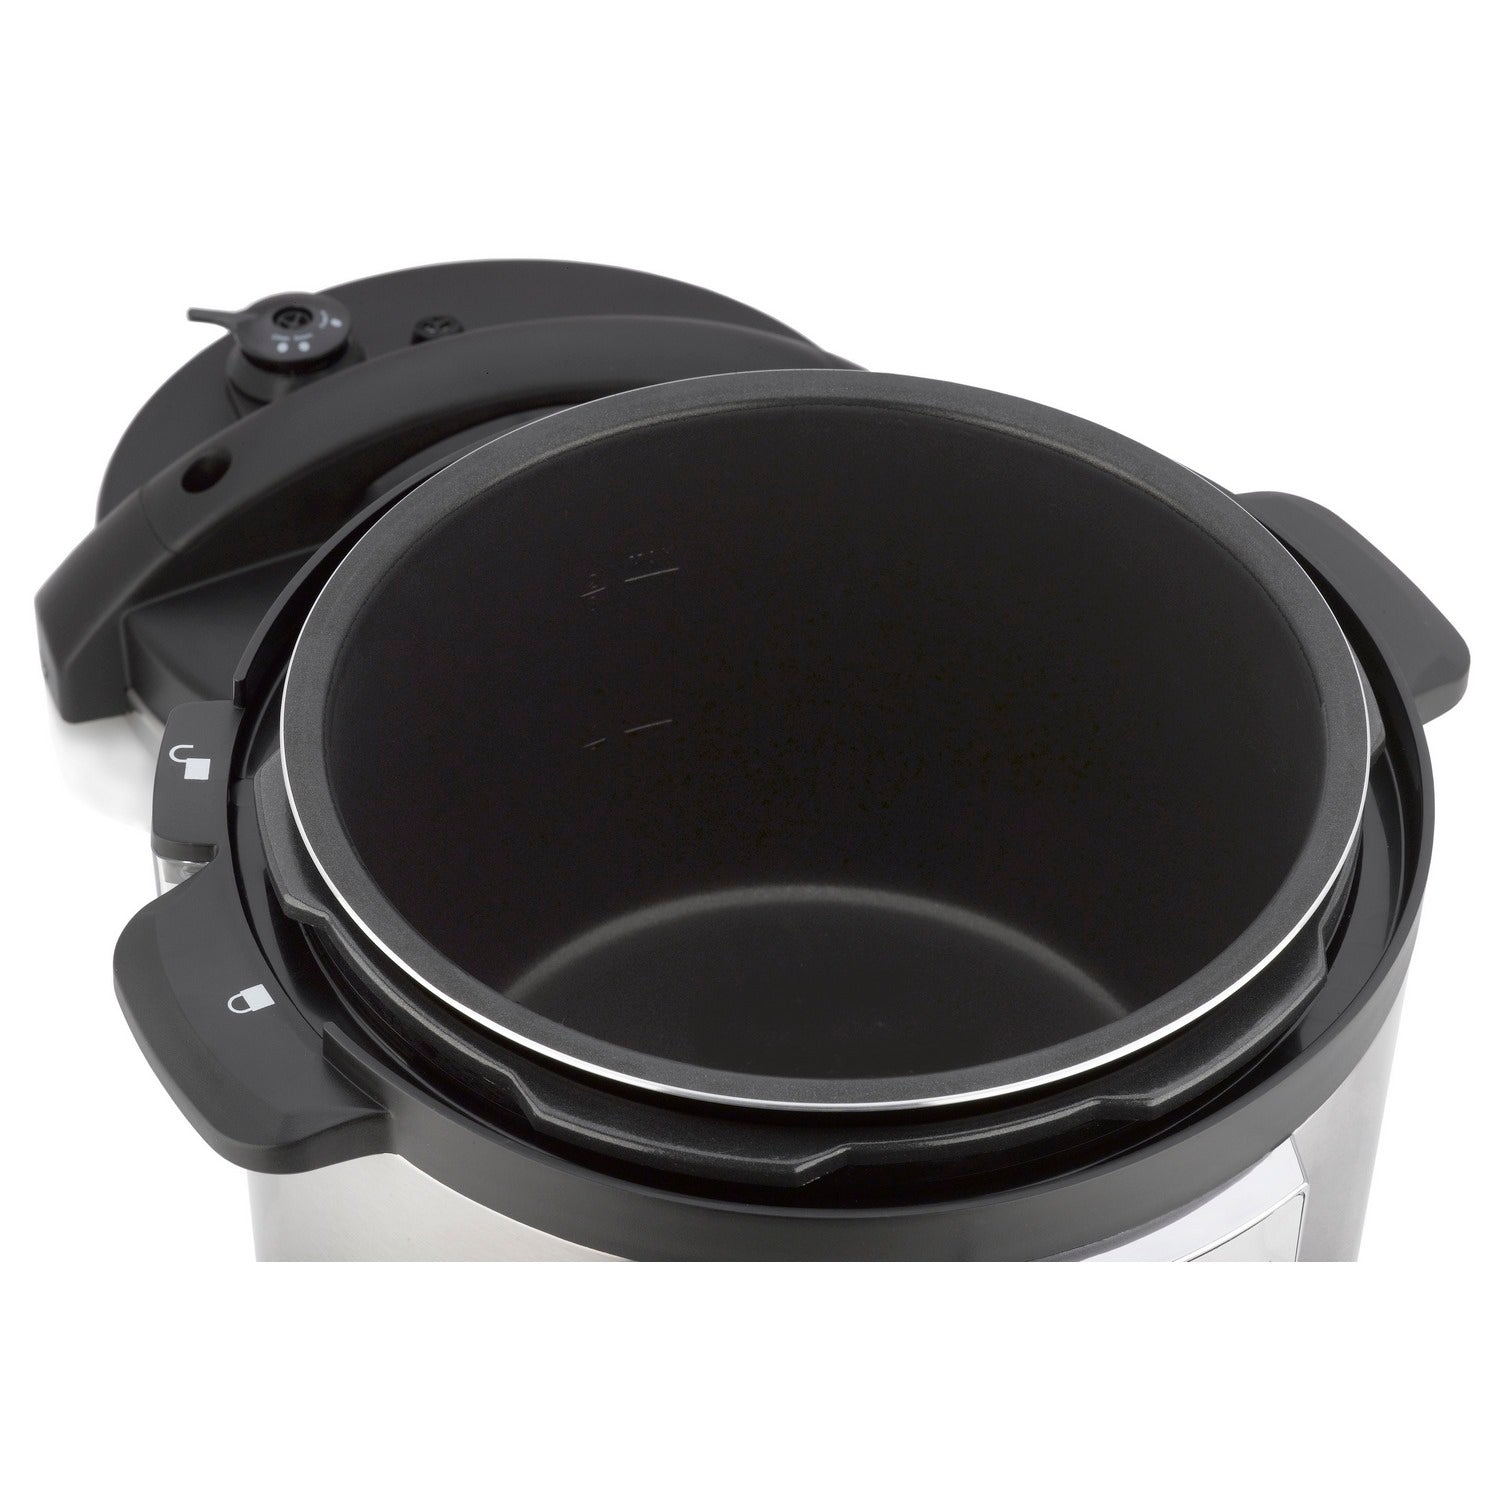 Removable Cooking Pot, 6Qt, Black Ceramic Coating (ZSPSERP26)